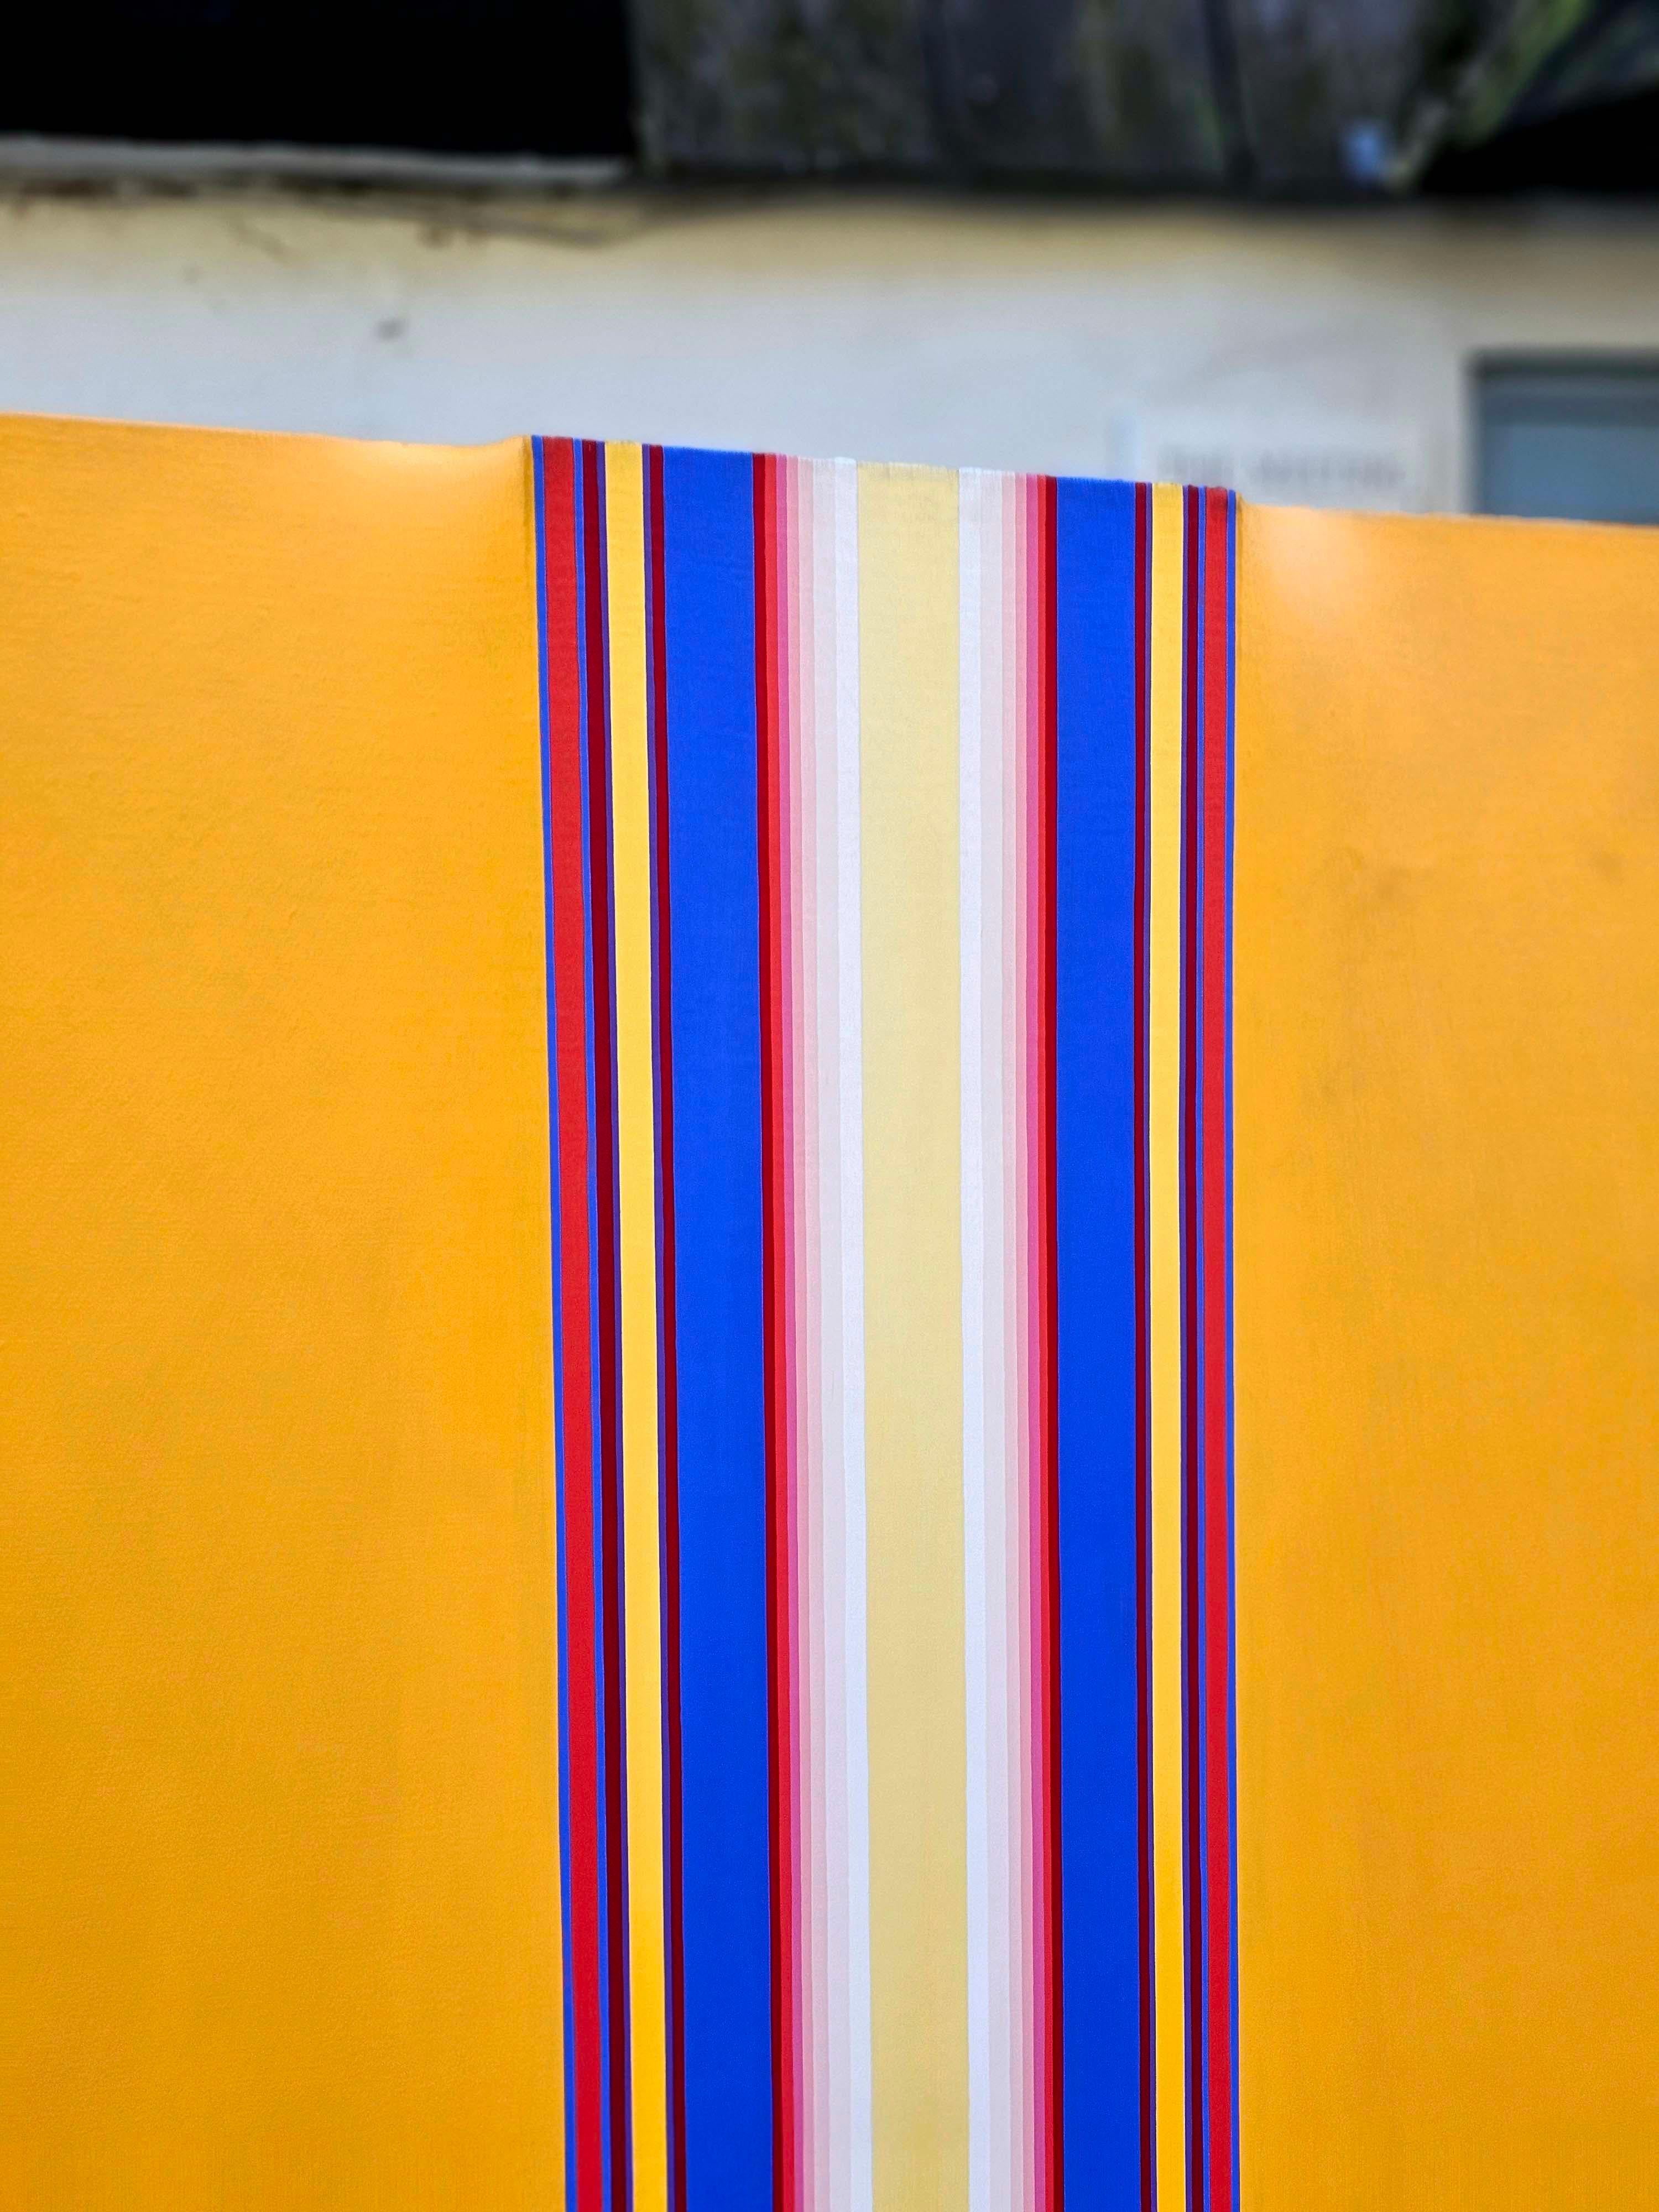 Large 1970s orange striped acrylic abstract work by British artist Derek Hirst For Sale 1